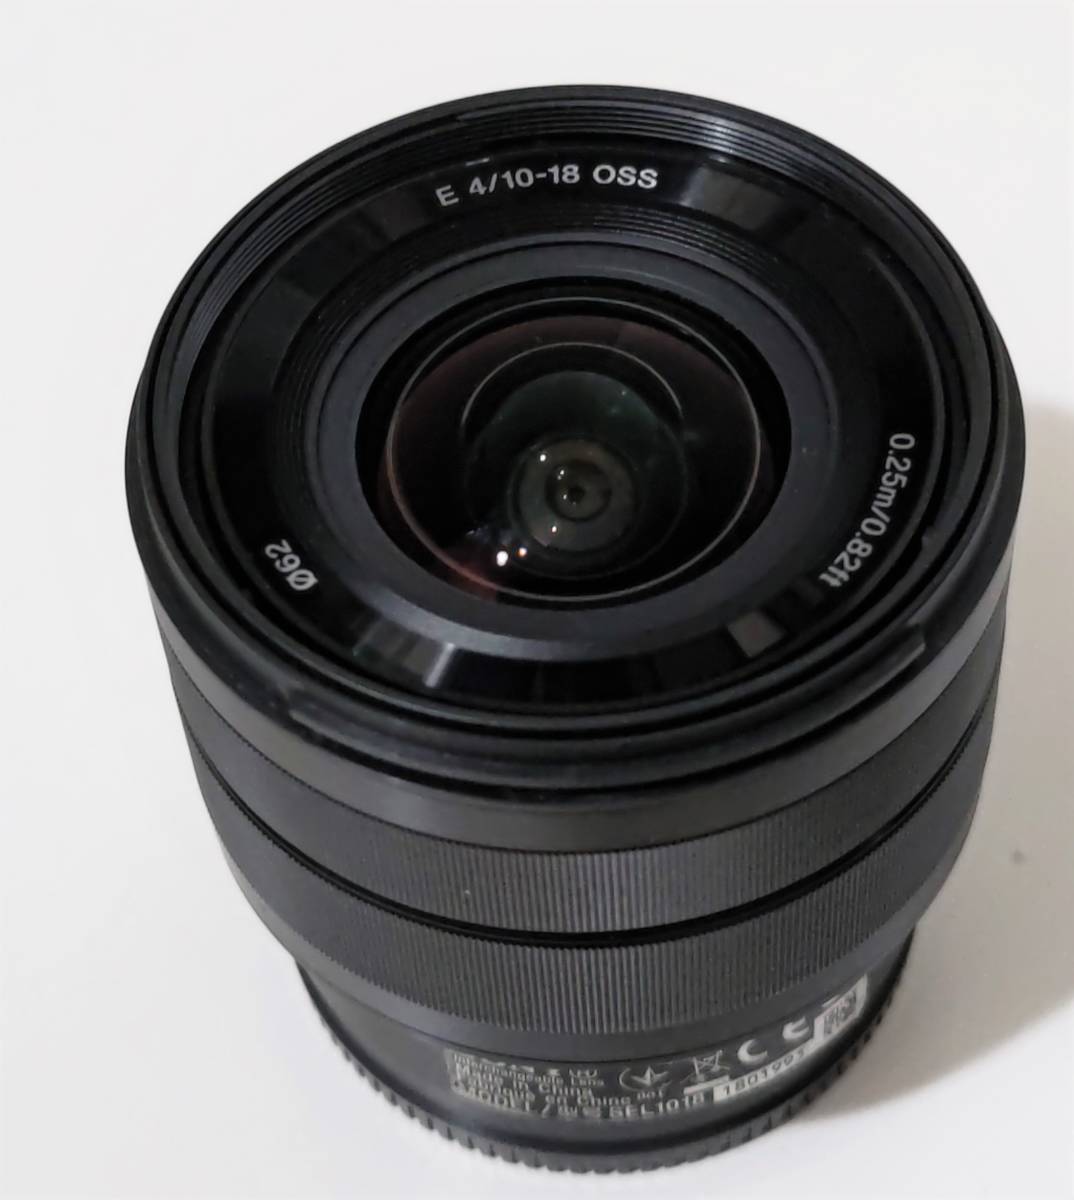  Sony SONY wide-angle zoom lens E- mount SEL 1018 lens E0,25m/0,82ft E 4/10-18 OSS ( black )